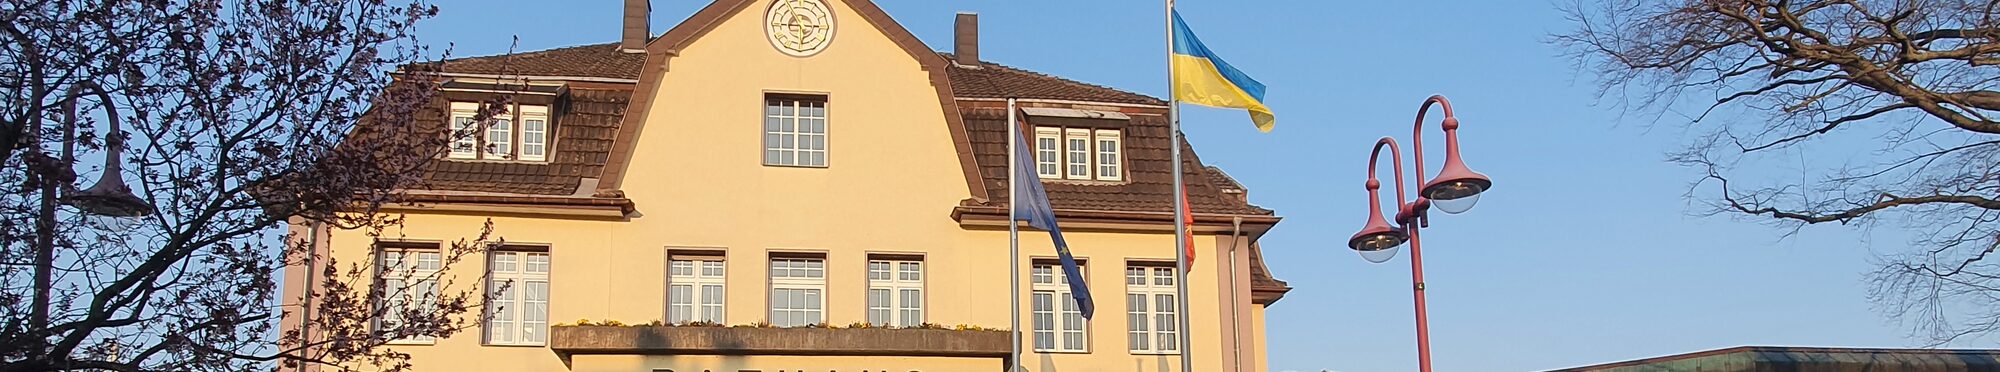 Rathaus Ukraine Flagge